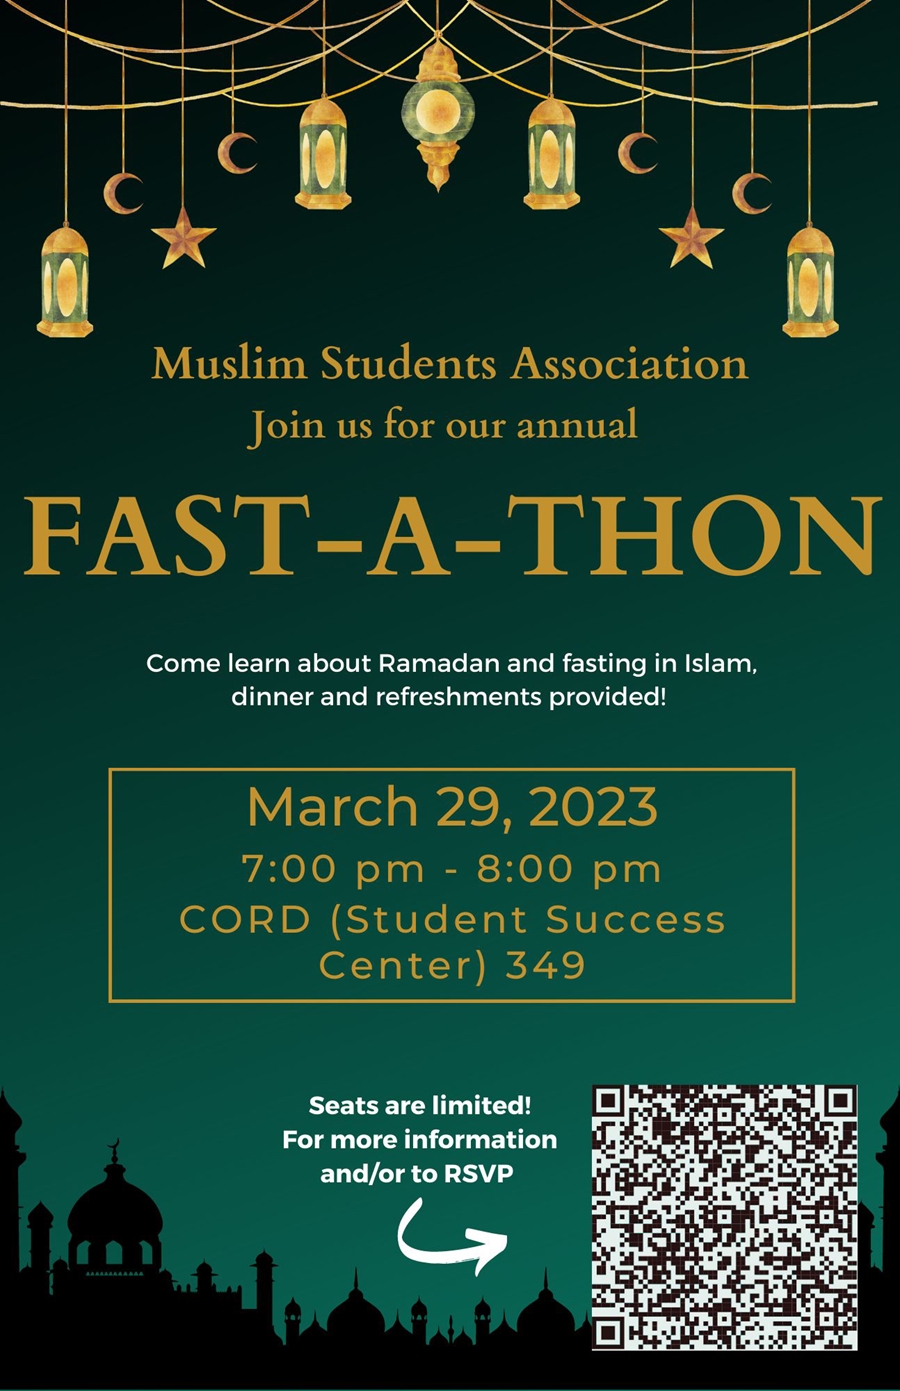 Muslim Students Association Fastathon 